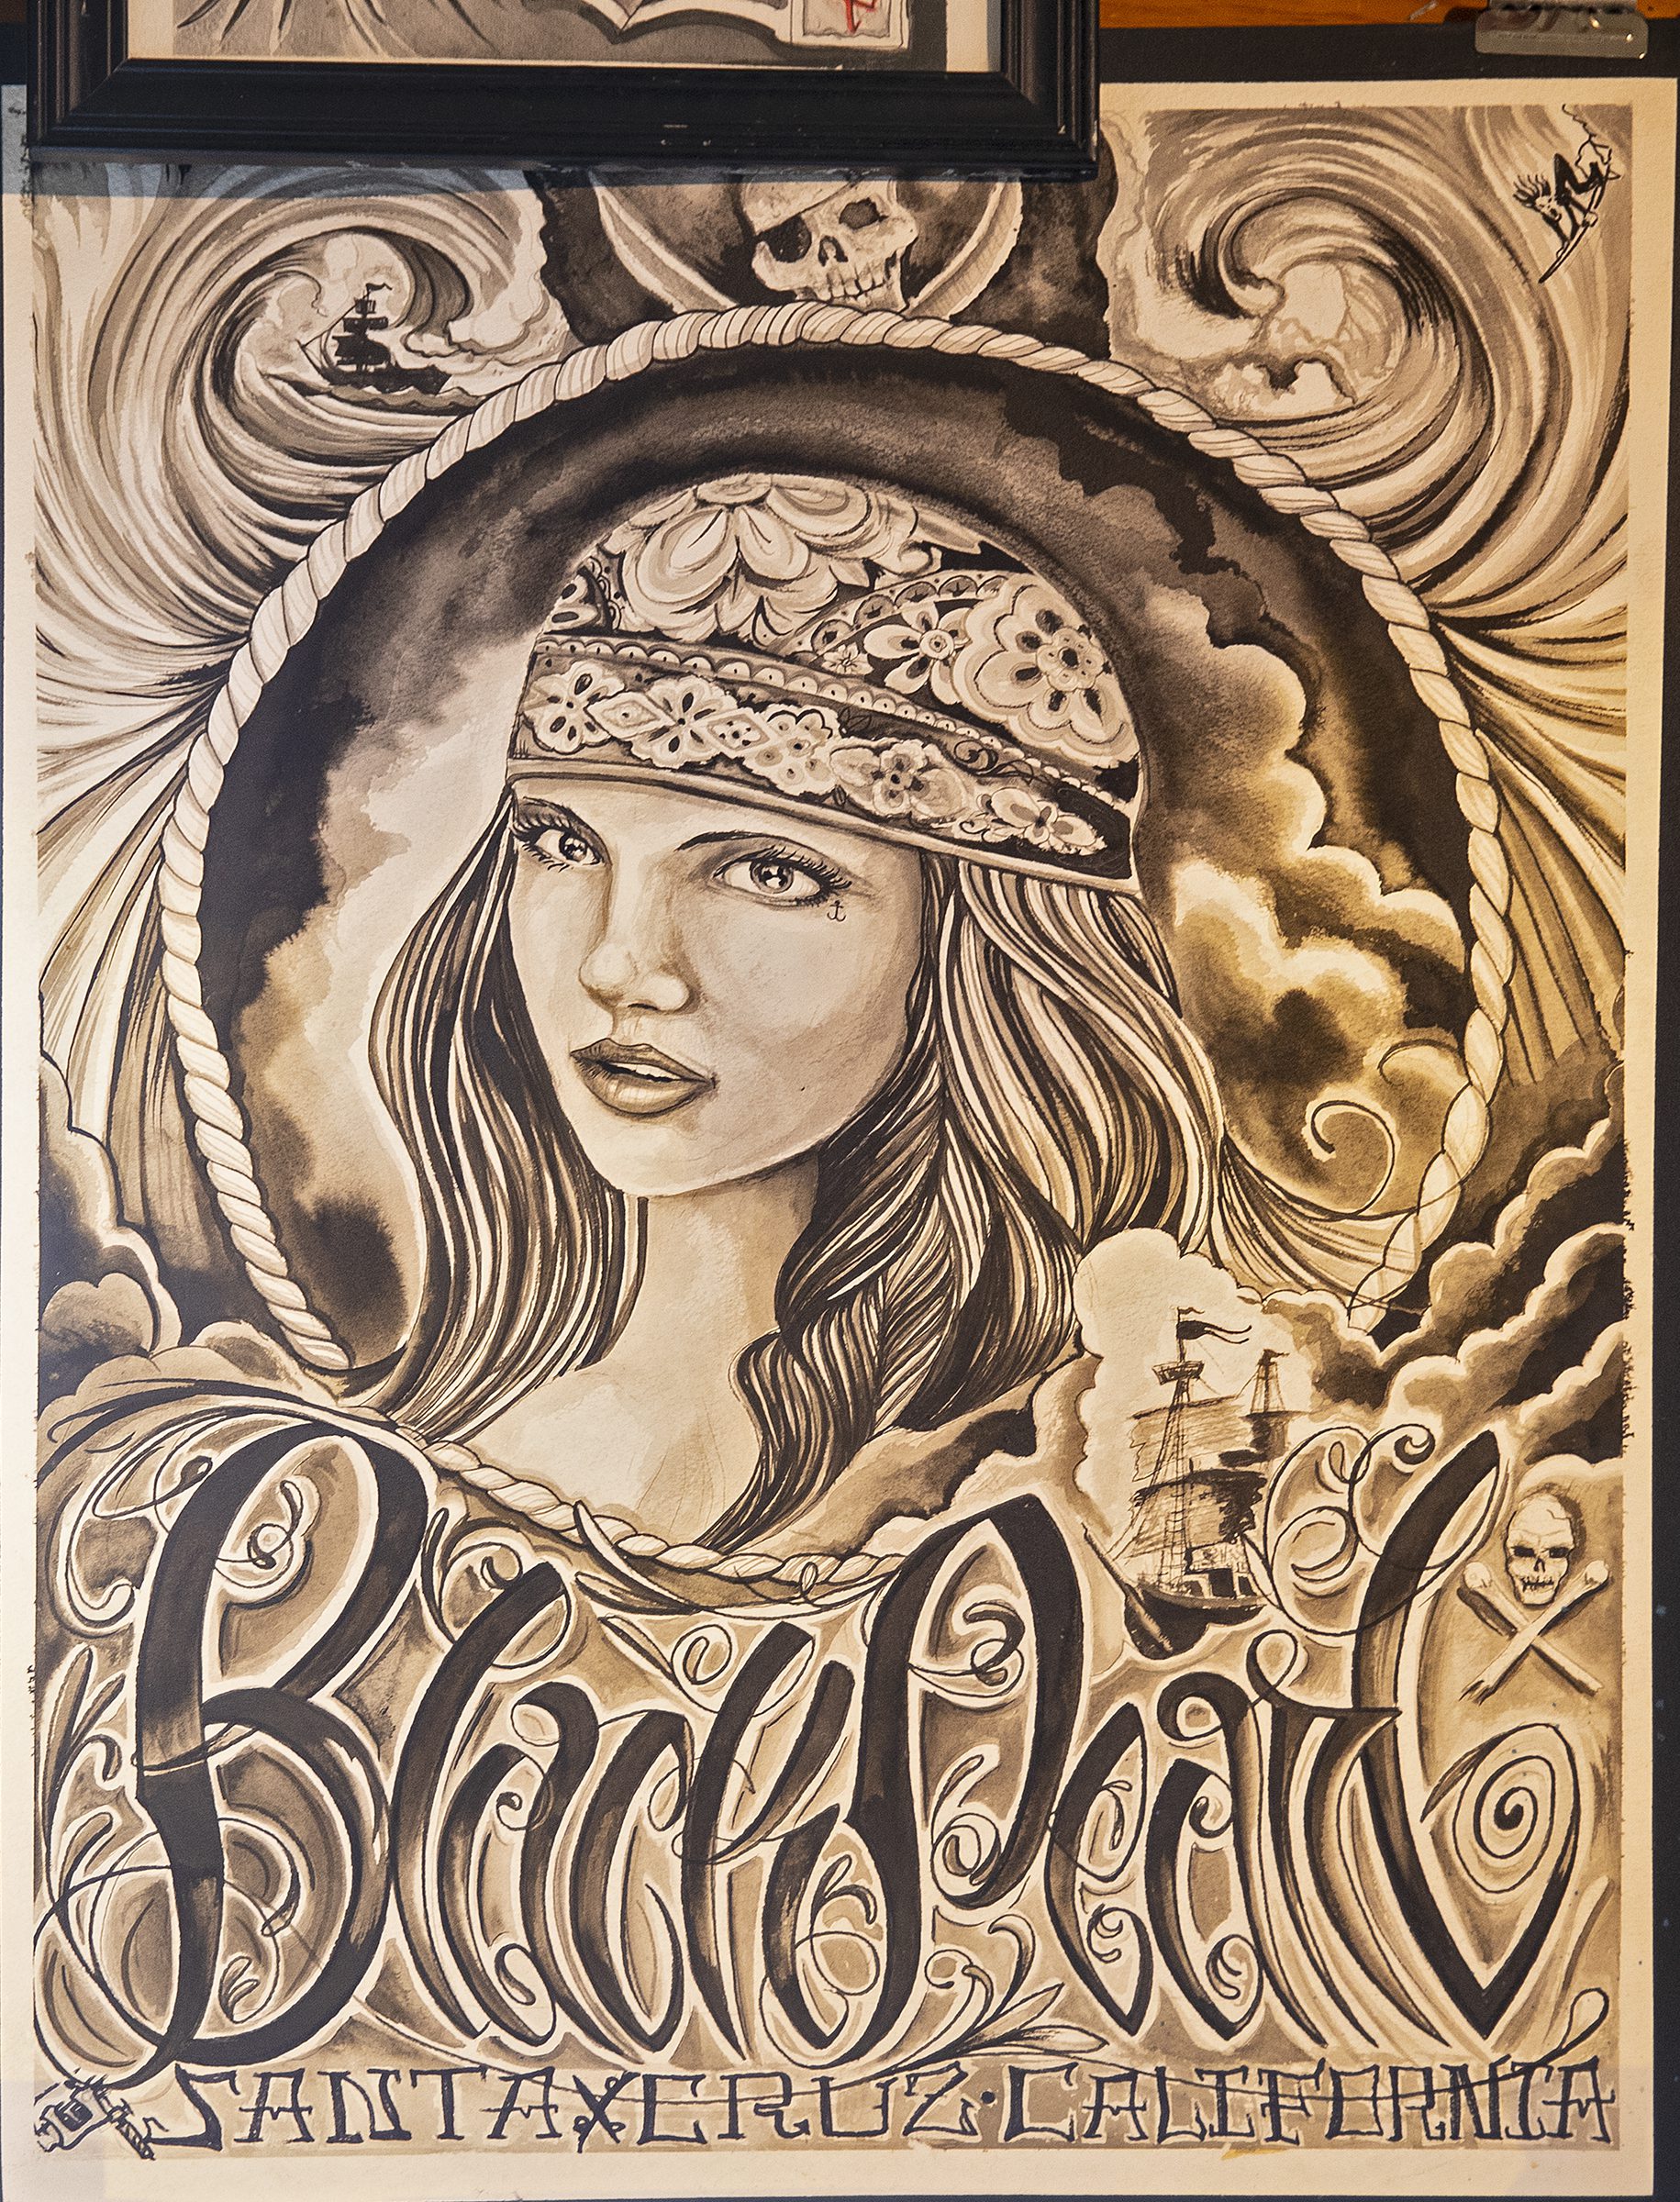 Artwork by Santa Cruz artist Mike Espinoza of Black Pearl Tattoo